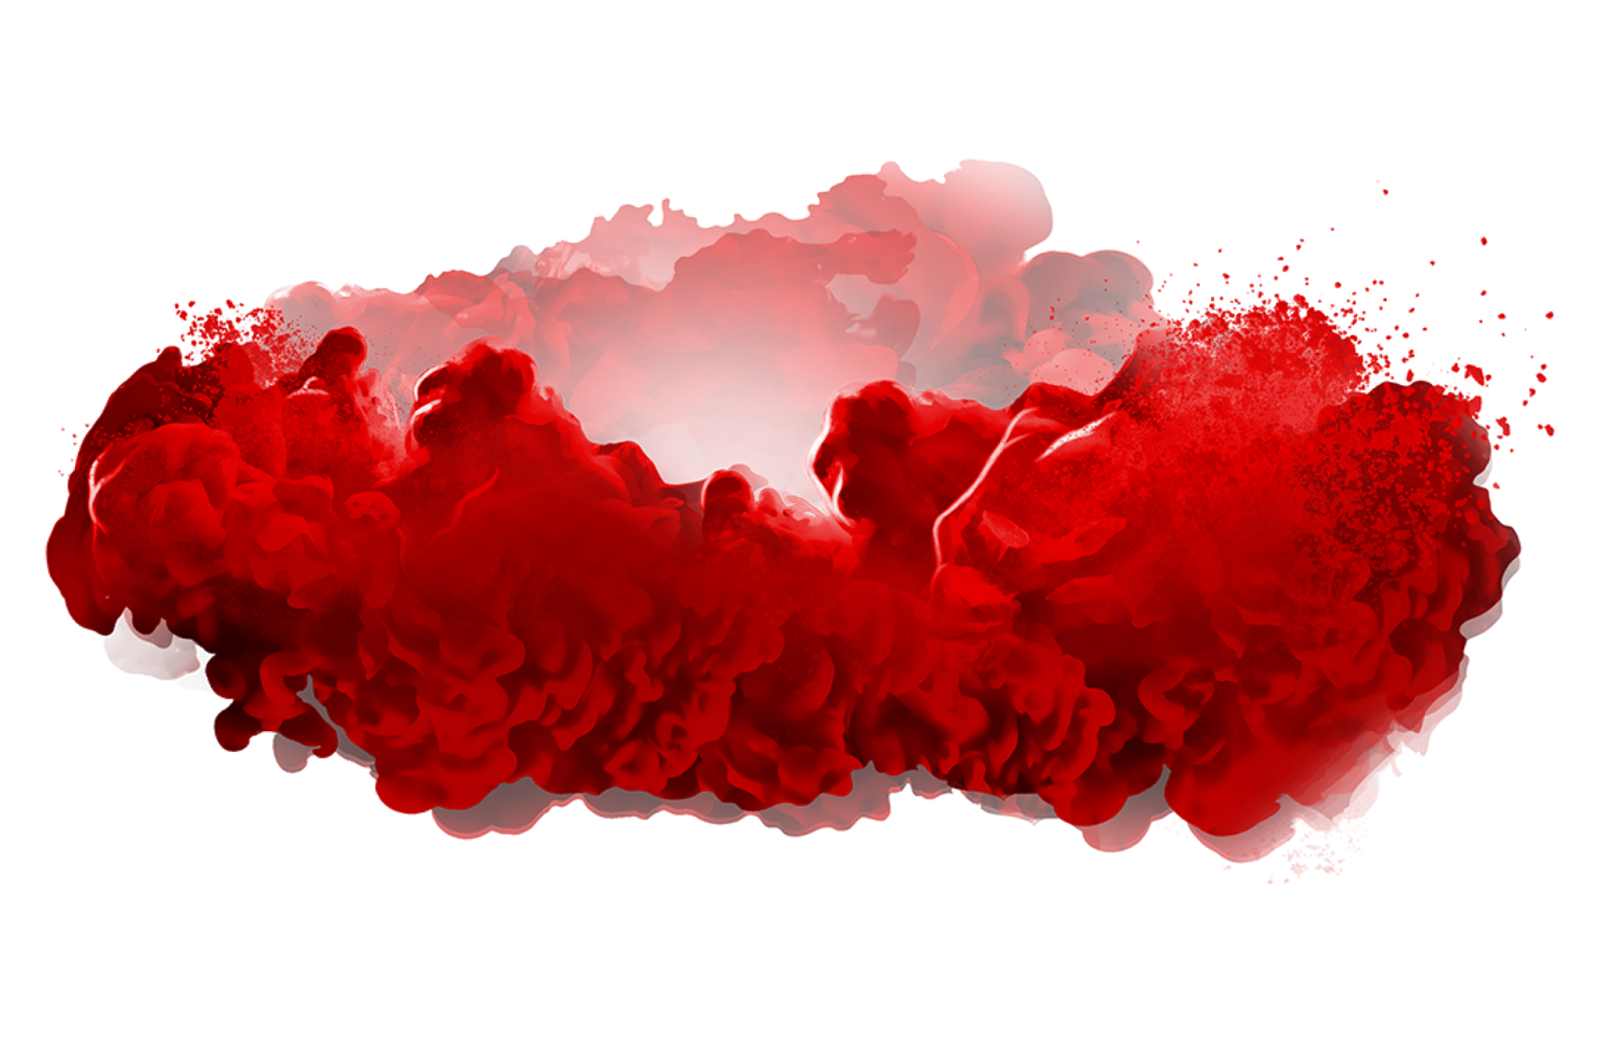 Blood Red Smoke PNG Background Image